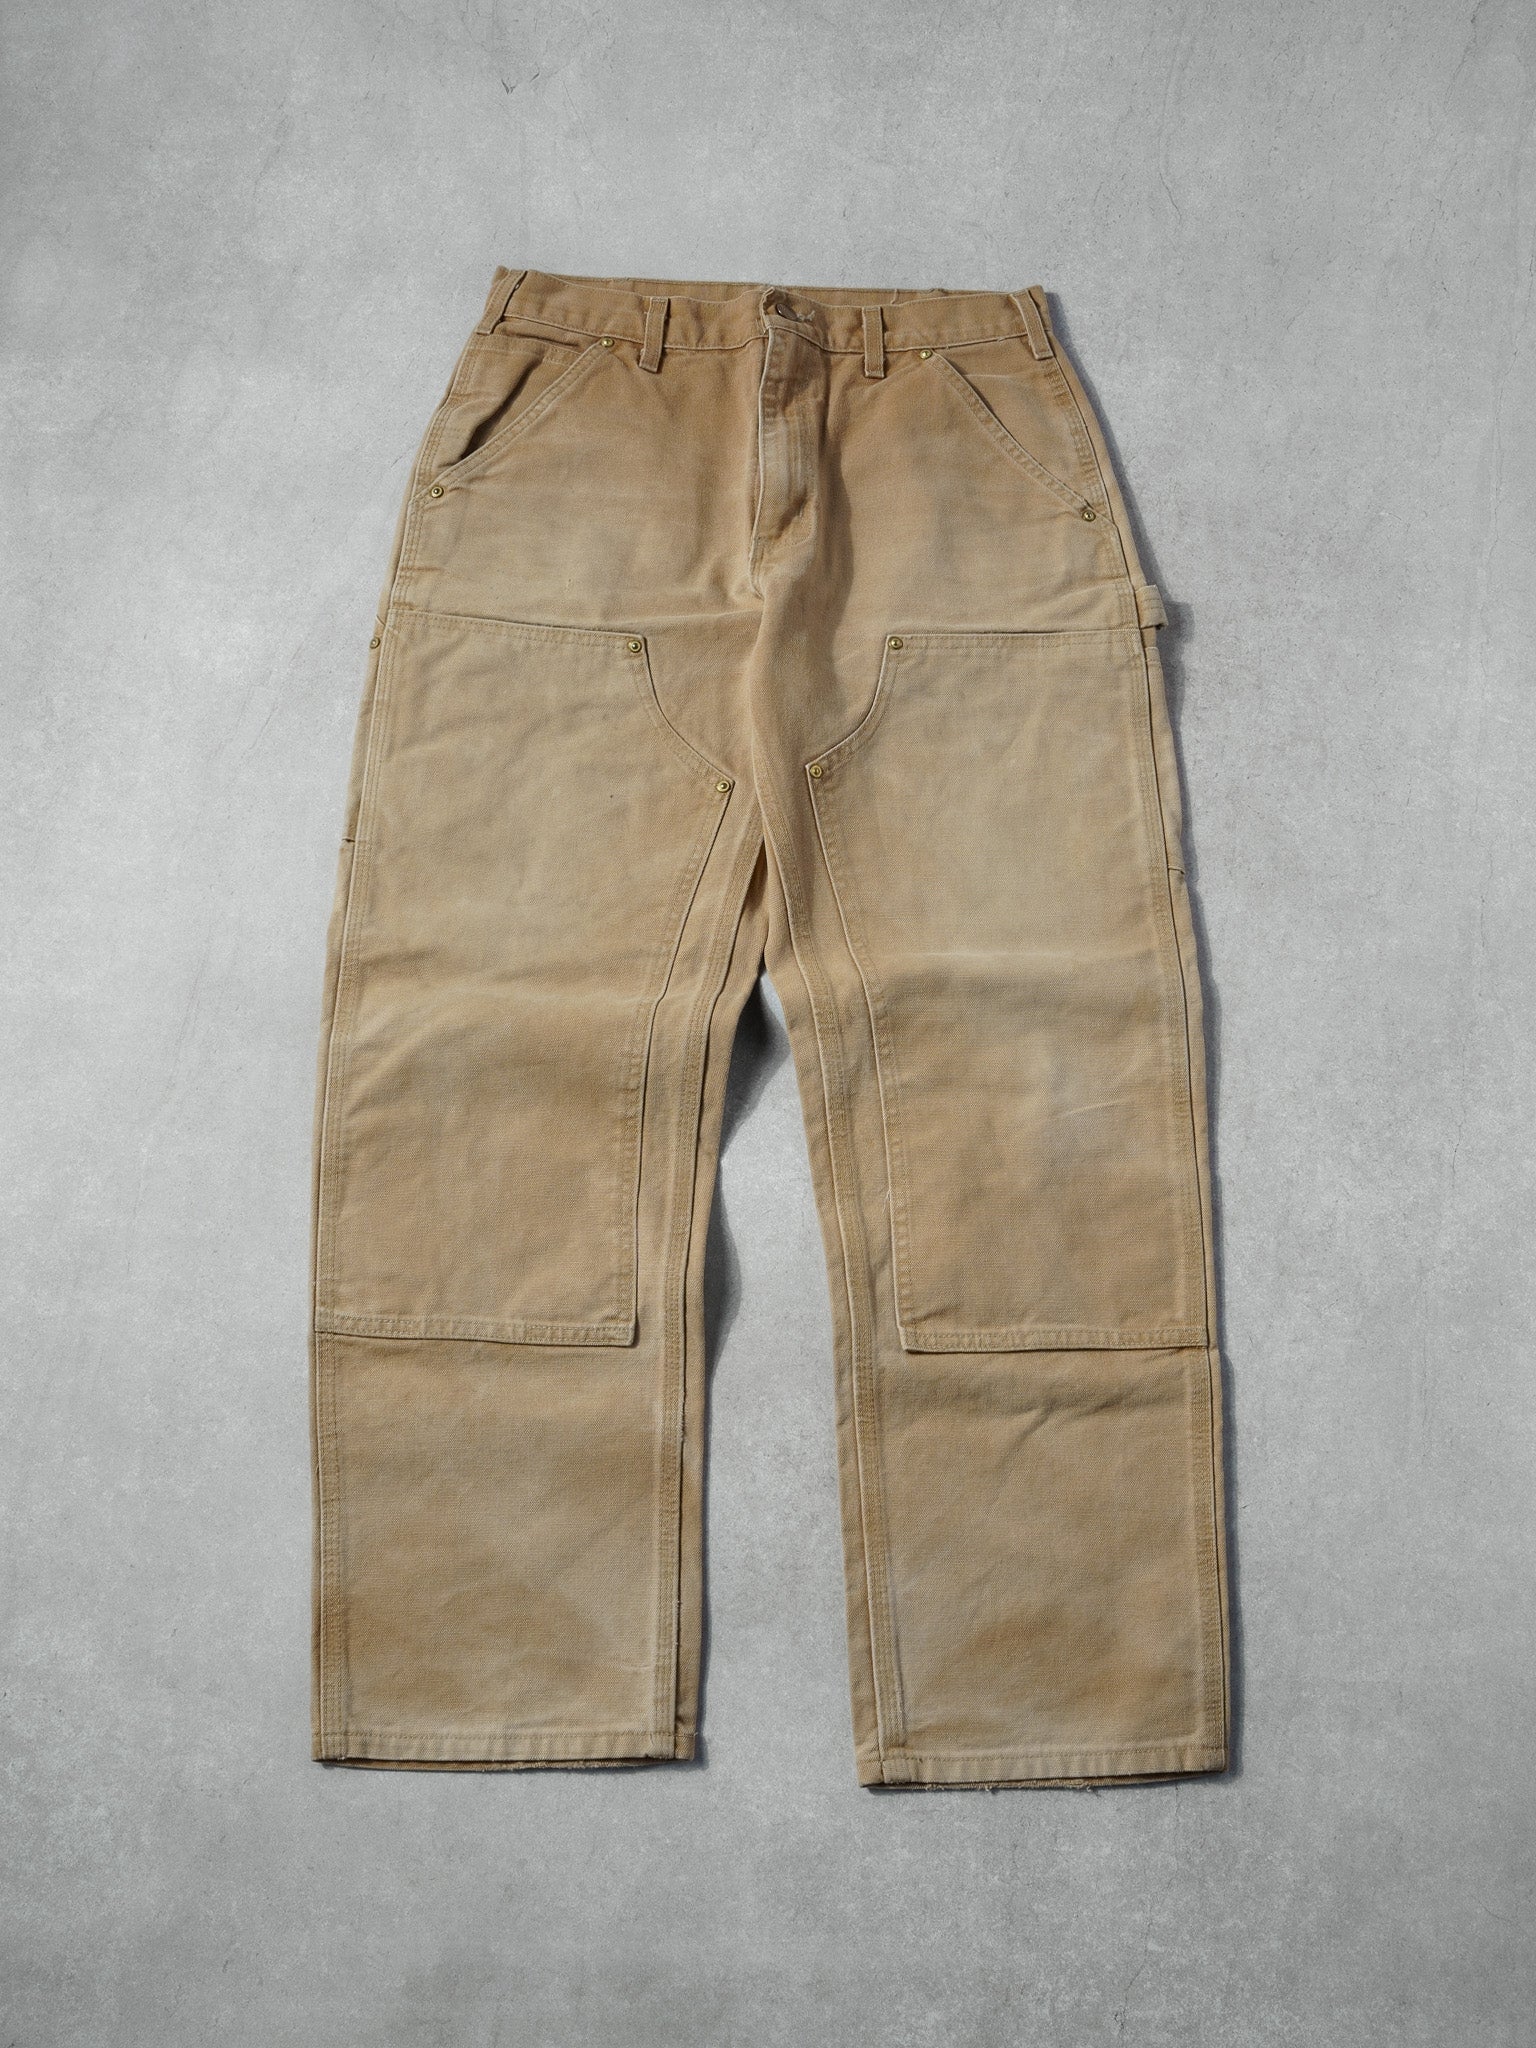 Vintage 90s Khaki Carhartt Dungeree Double Knee Carpenter Pants (32x29)